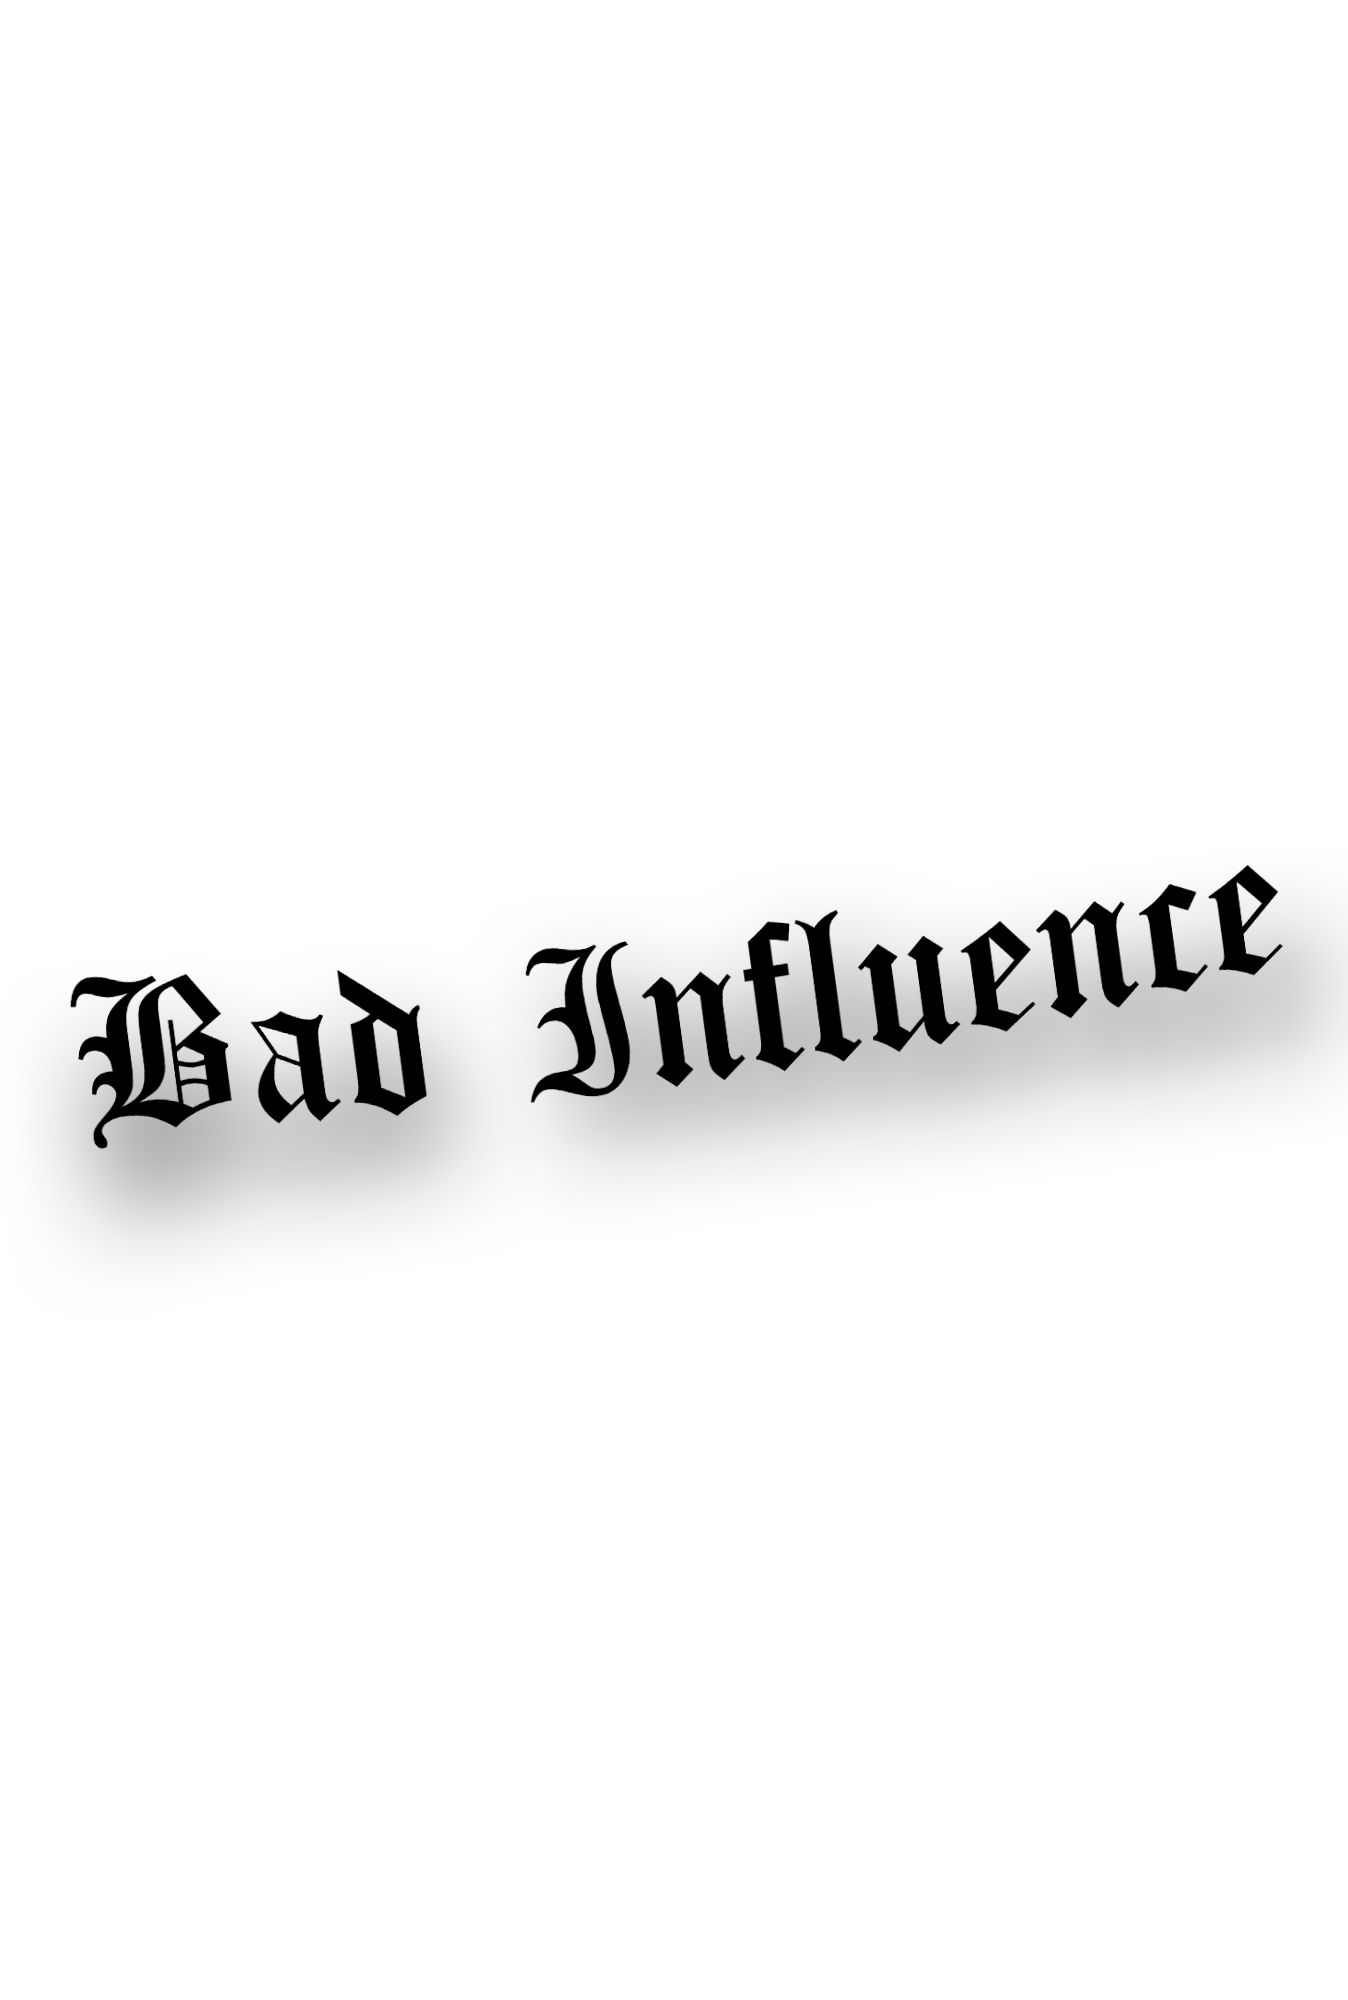 ''Bad Influence'' - Plotted Vinyl Sticker